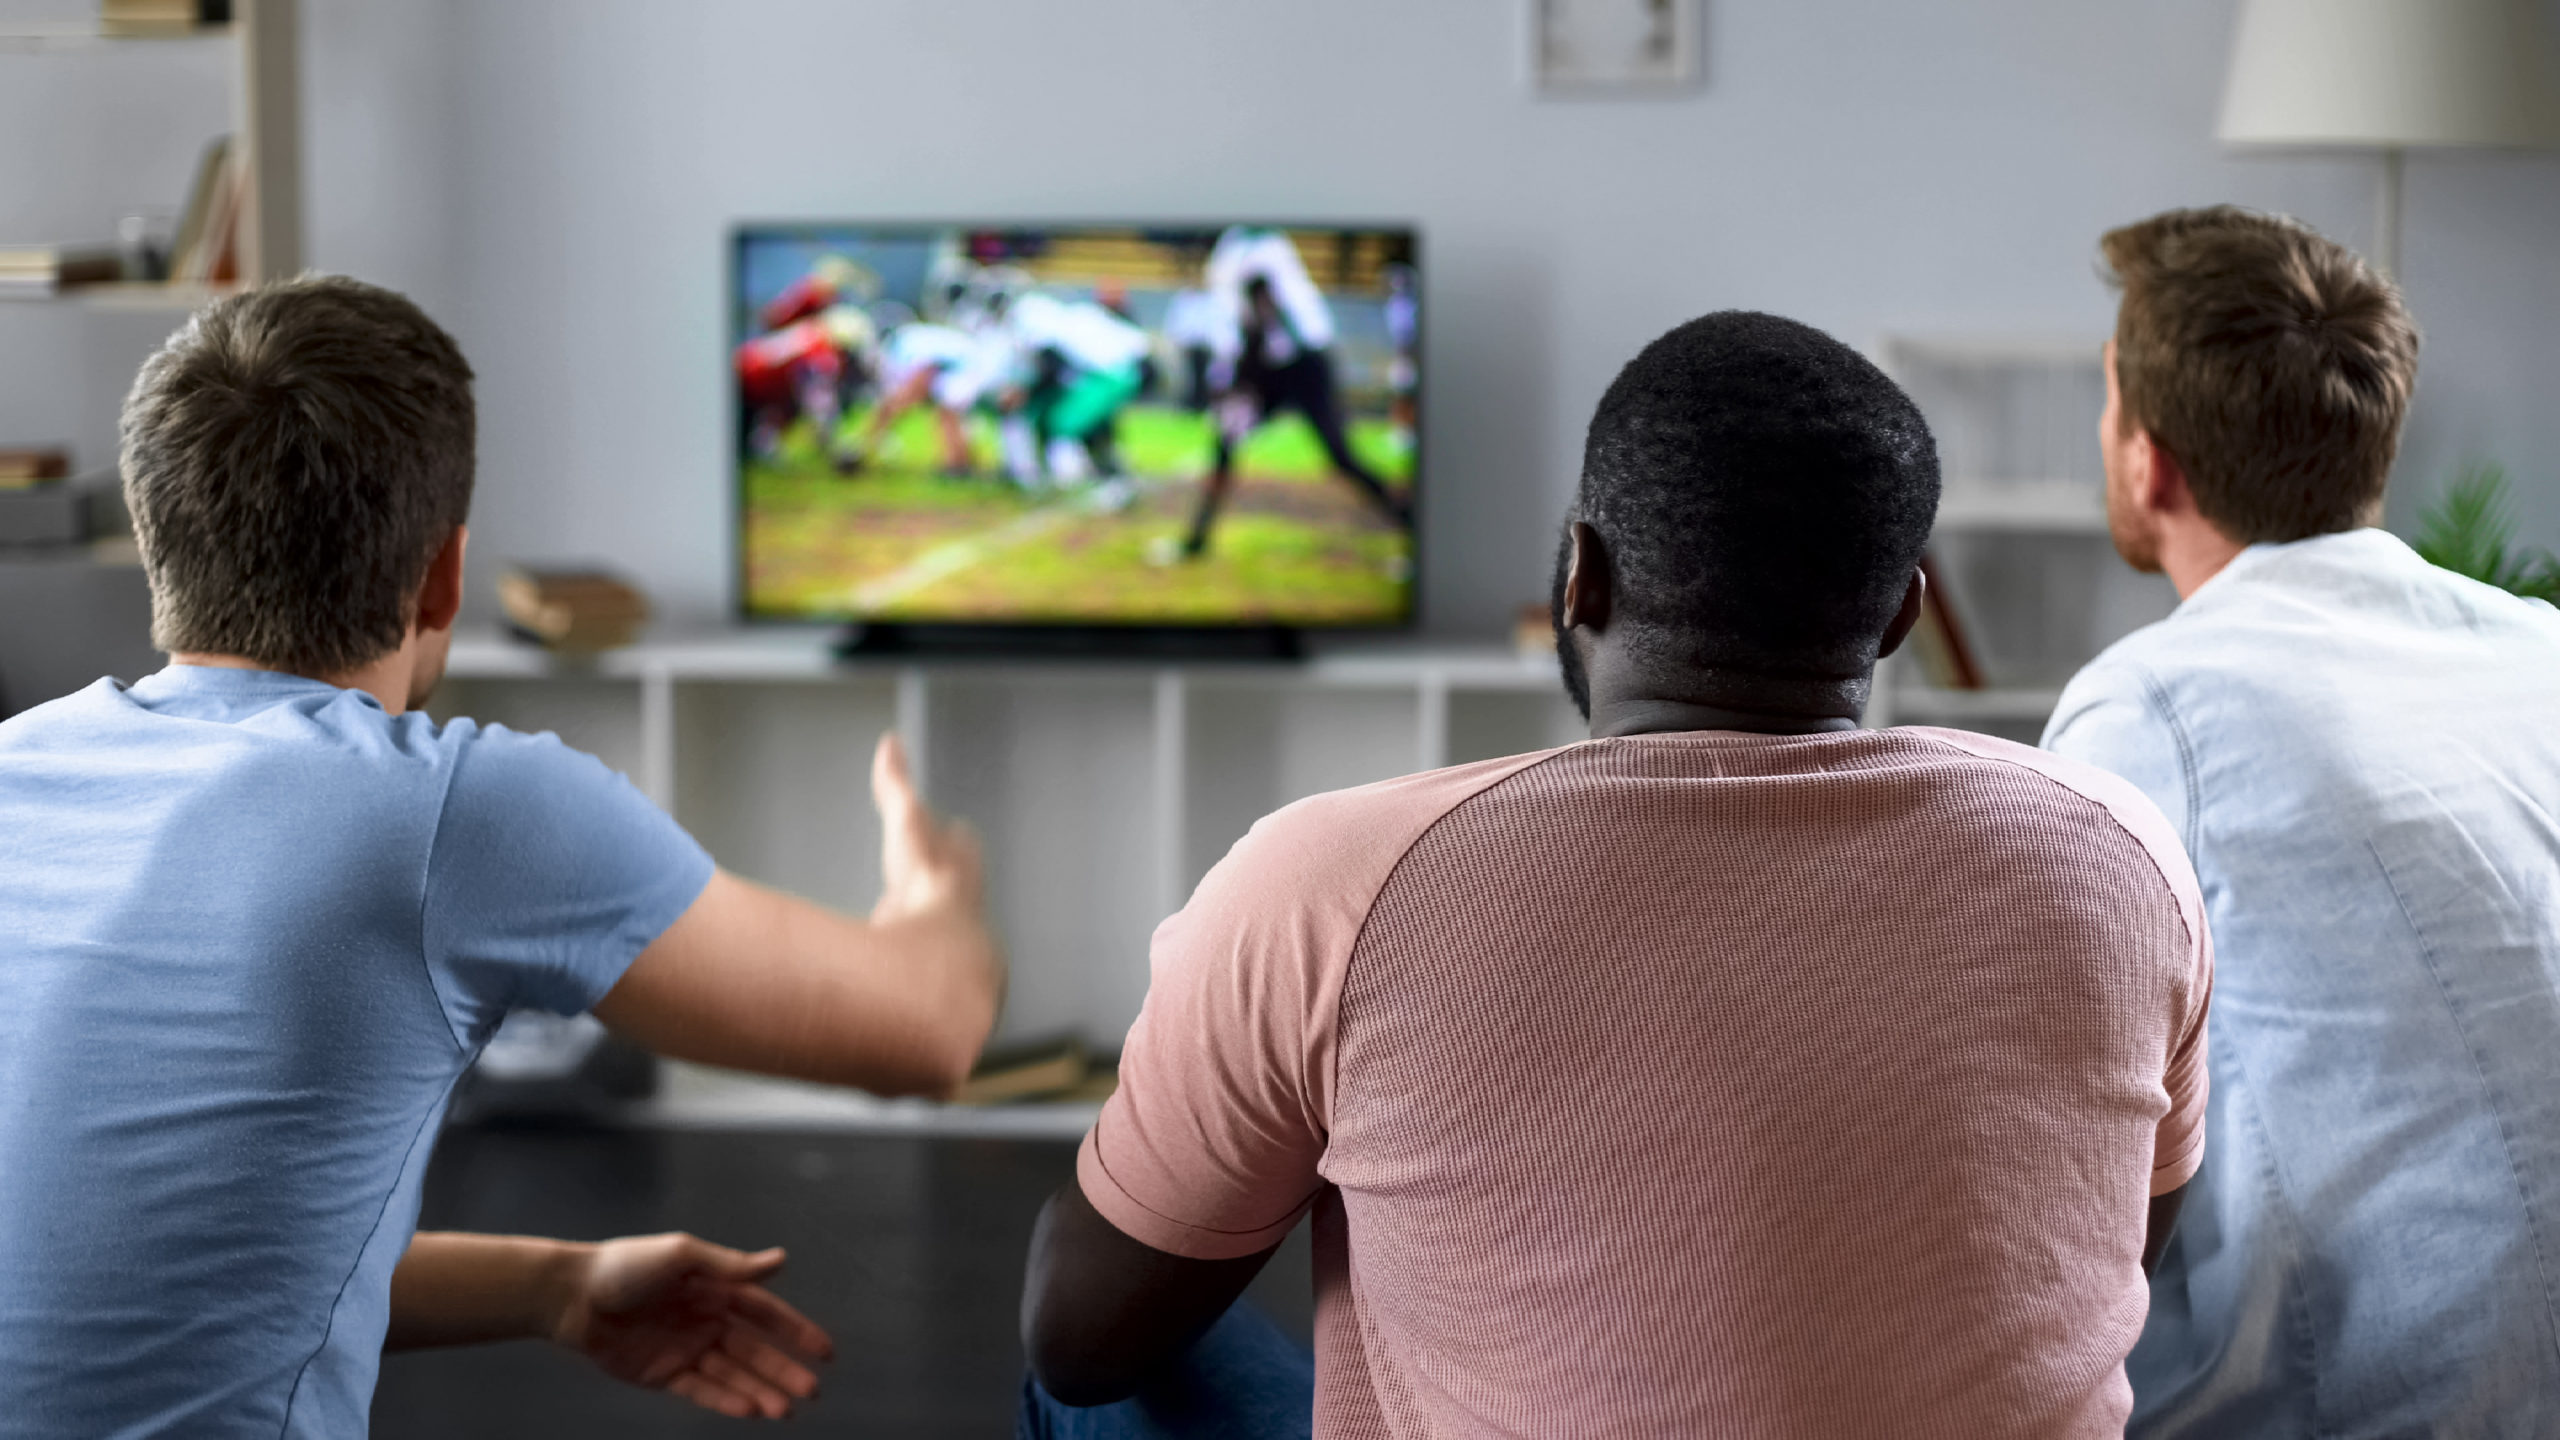 Friends watch football on TV